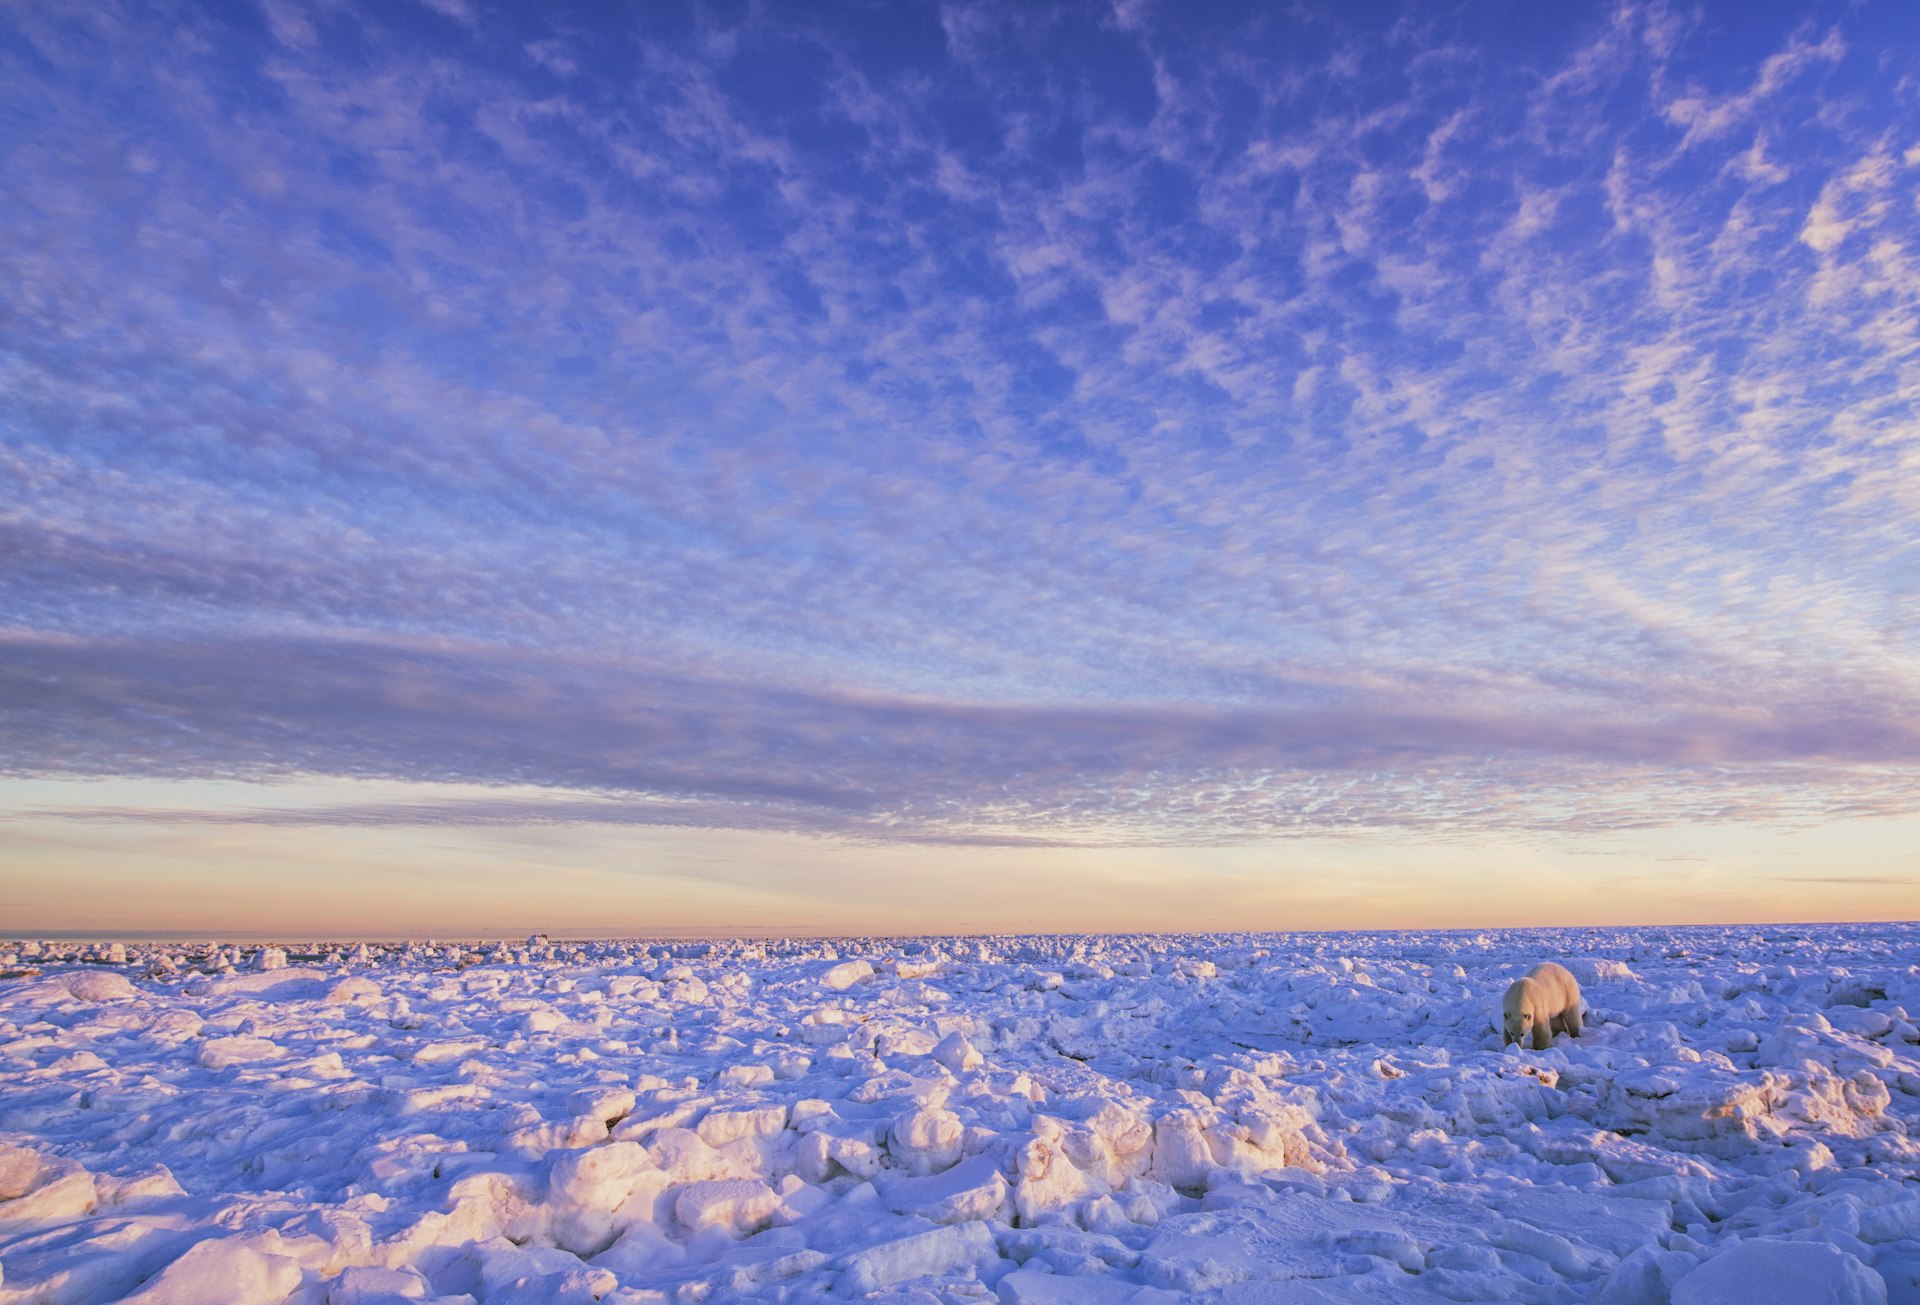 A solitary polar bear stalks the ice along the Hudson Bay coast in Canada at sunset.